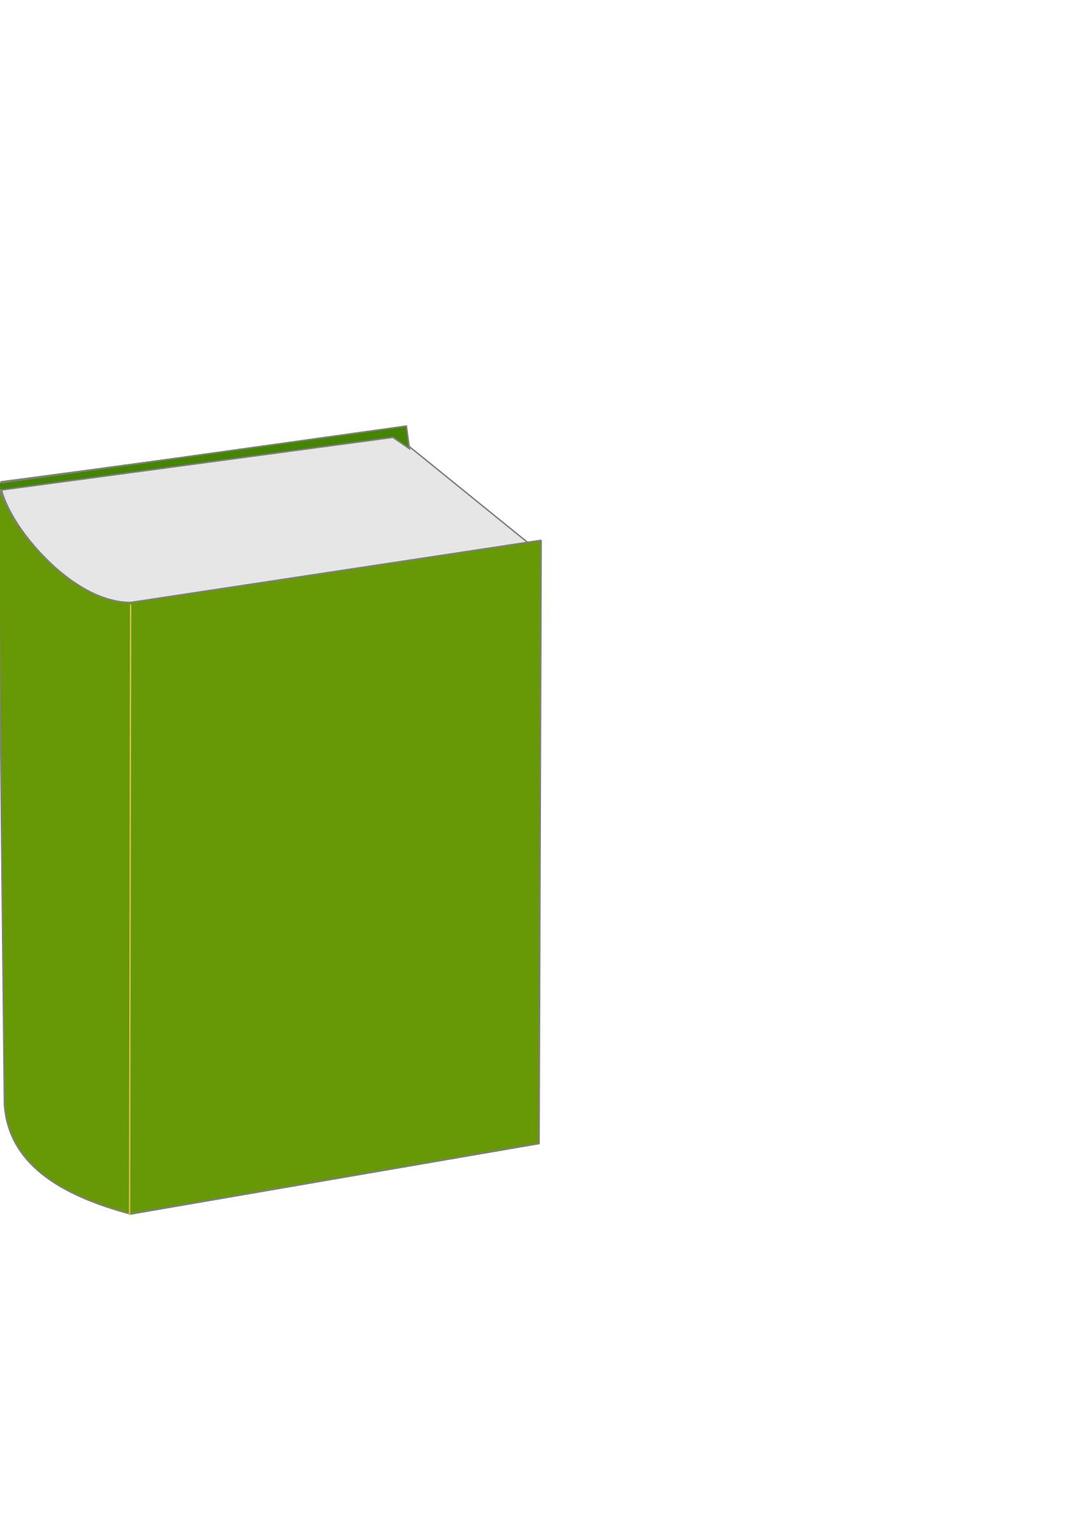 Green Book png transparent